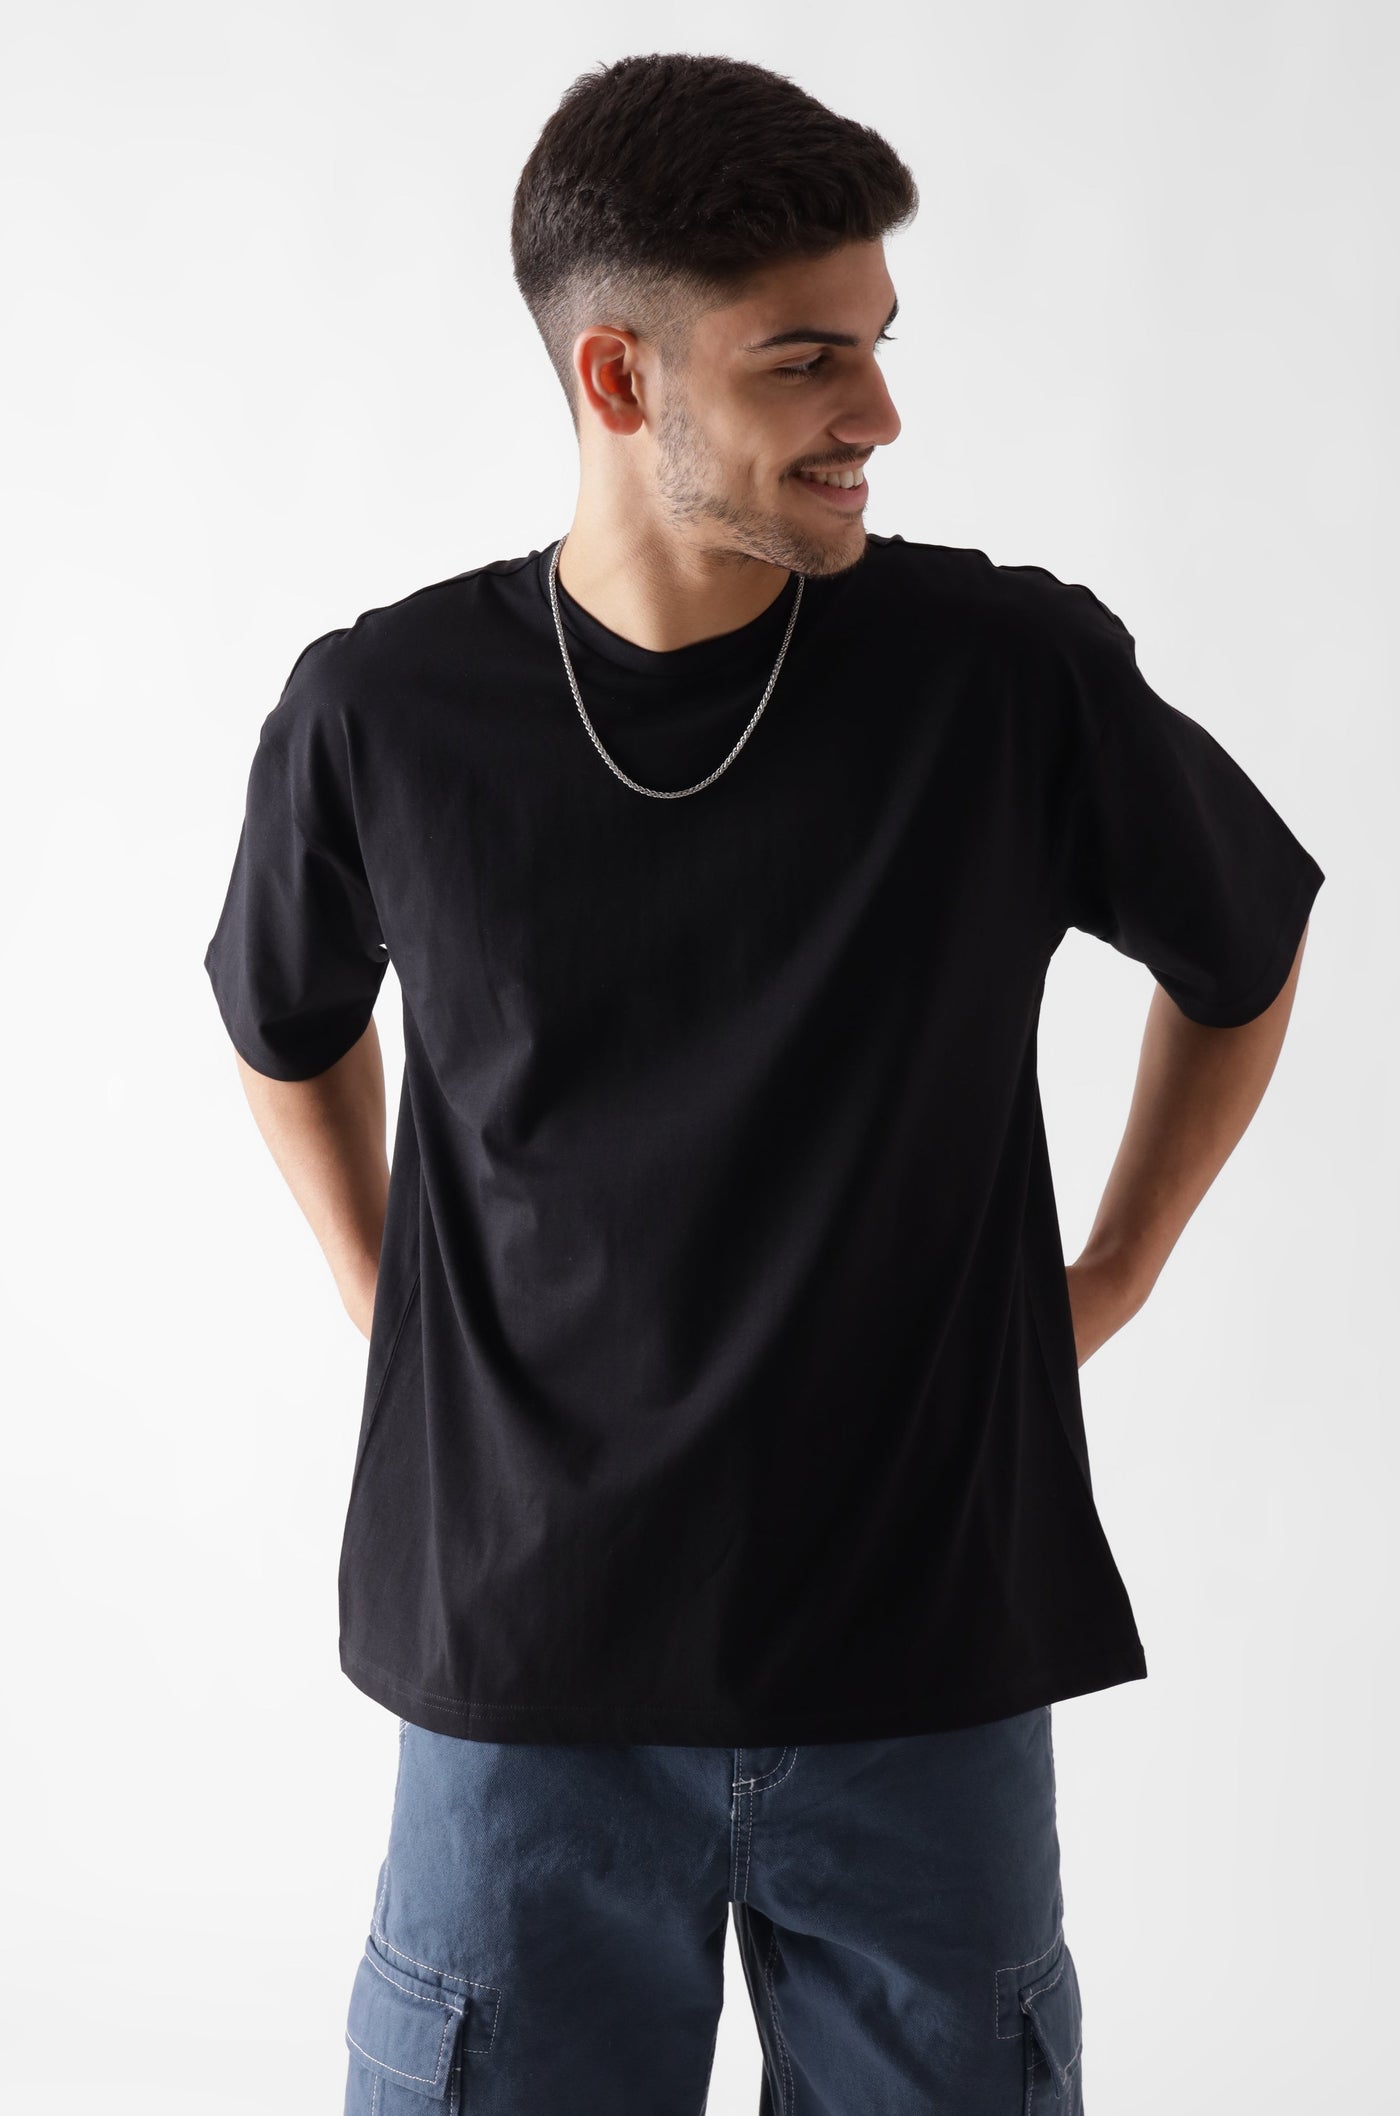 Buy Classic Black Oversized T-Shirt for Men, Premium Quality